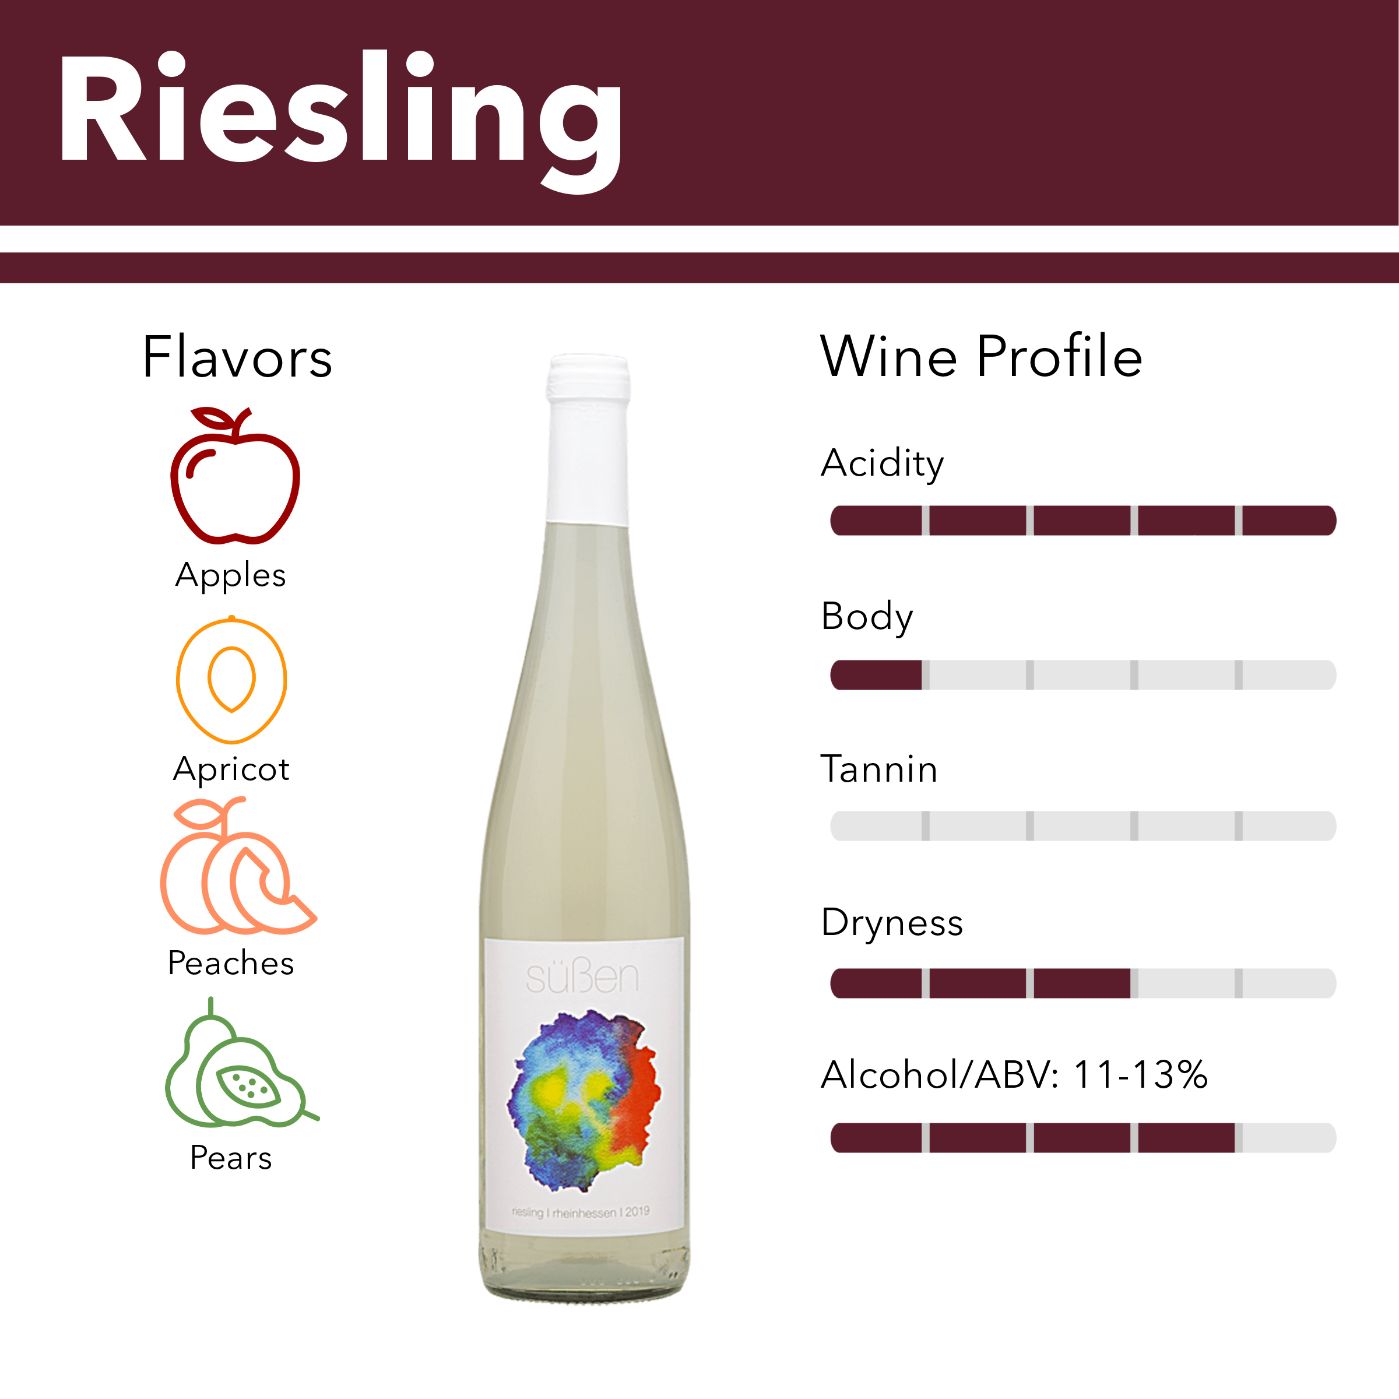 Riesling wine flavor profile.